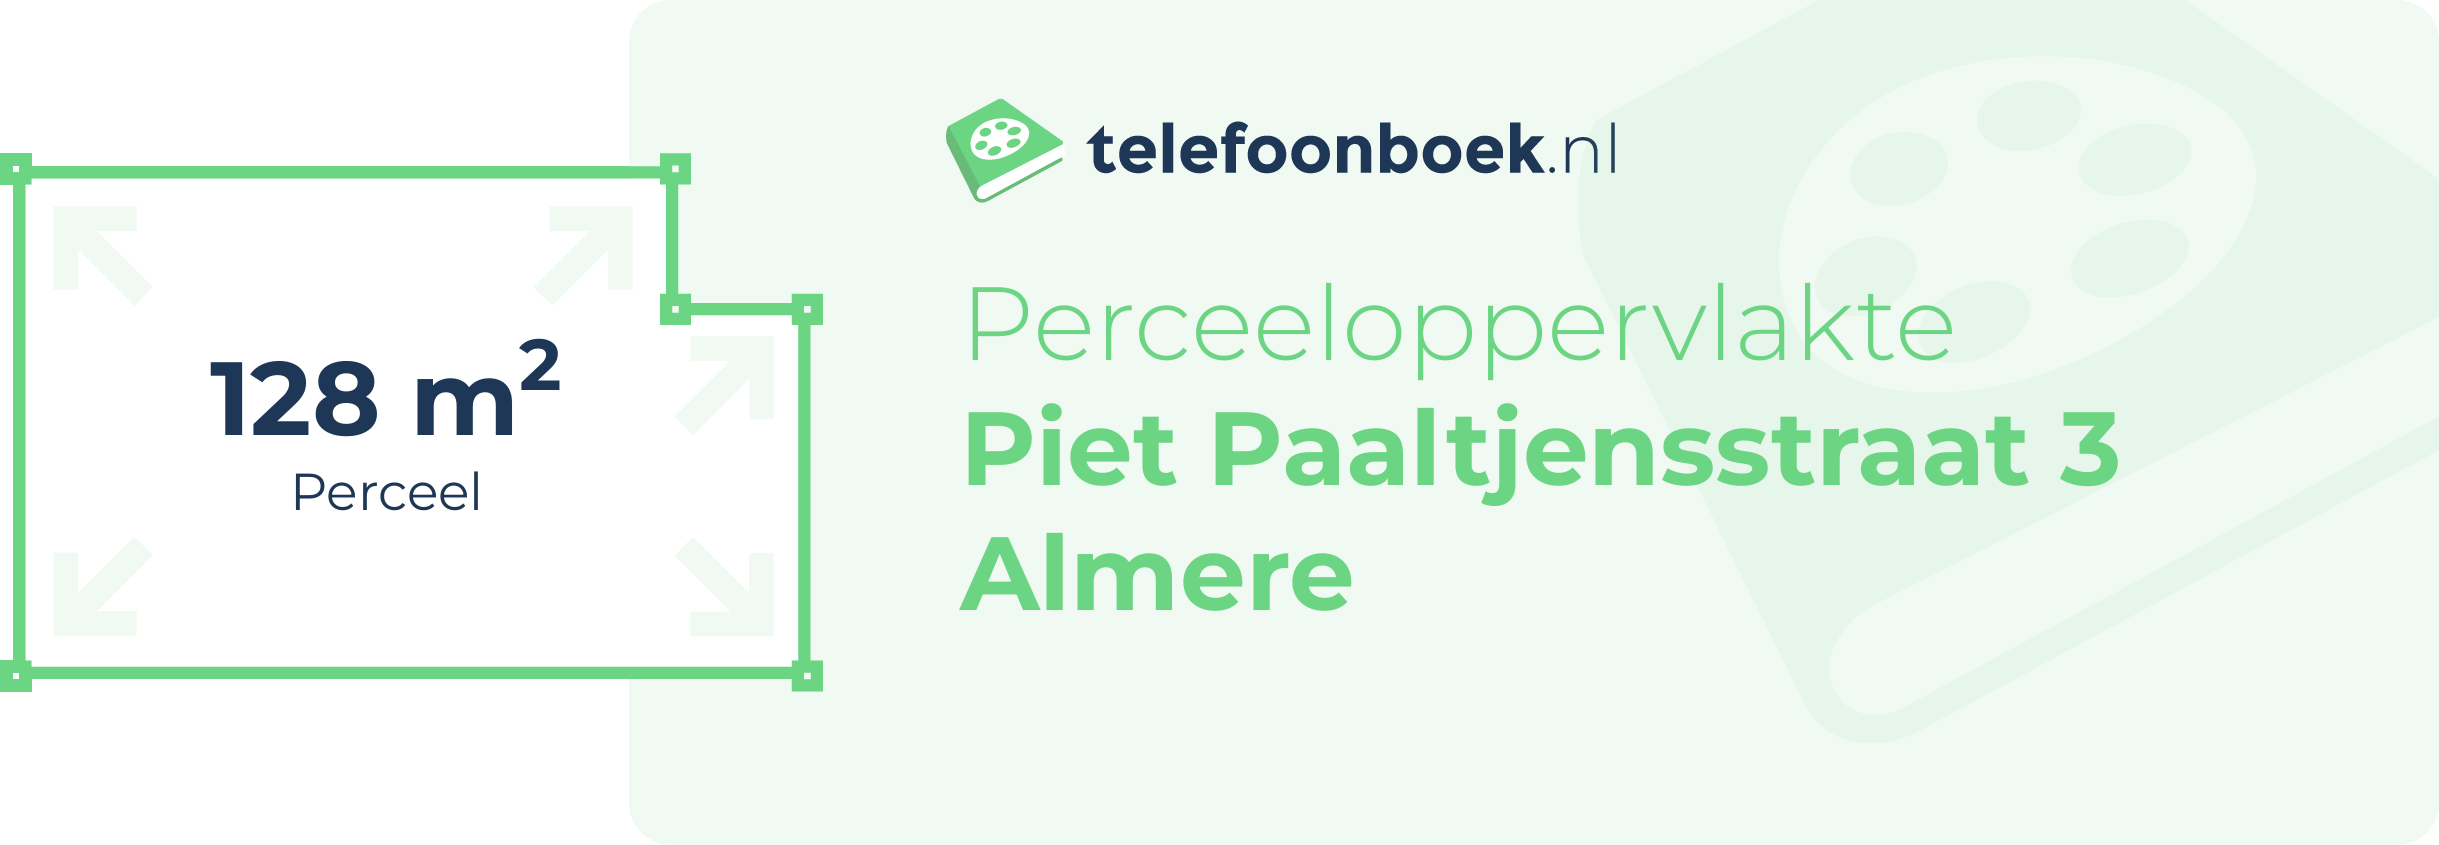 Perceeloppervlakte Piet Paaltjensstraat 3 Almere